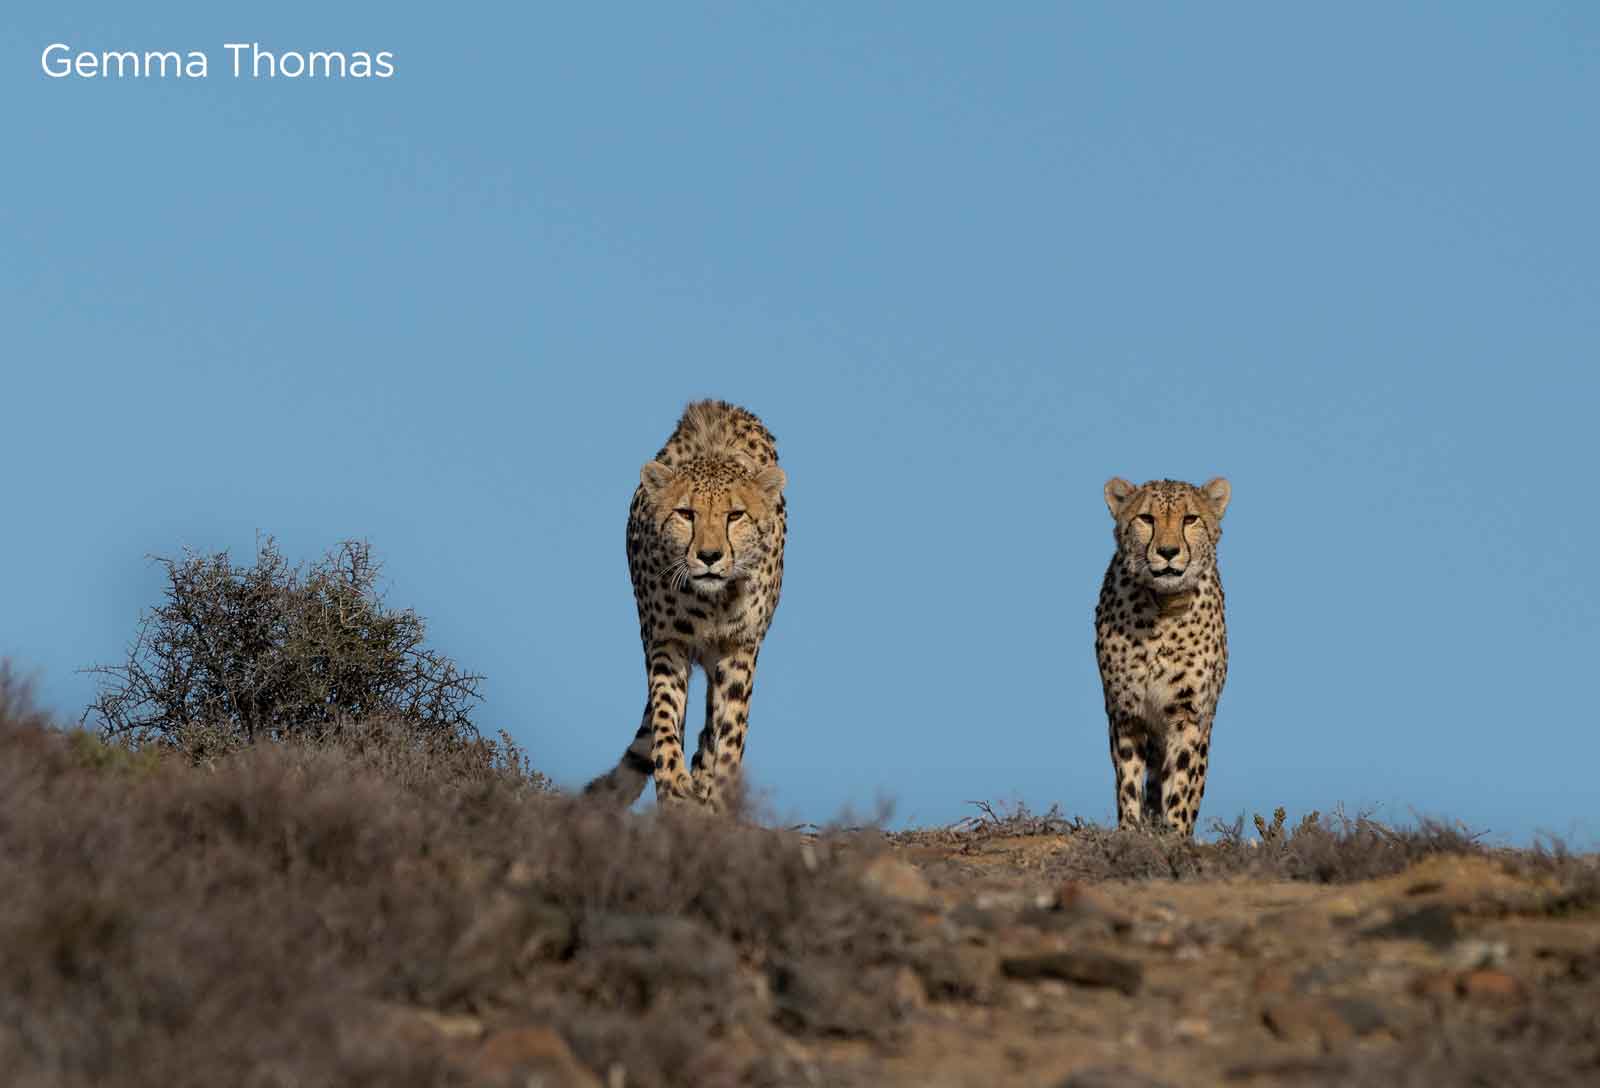 Coalition of Cheetah